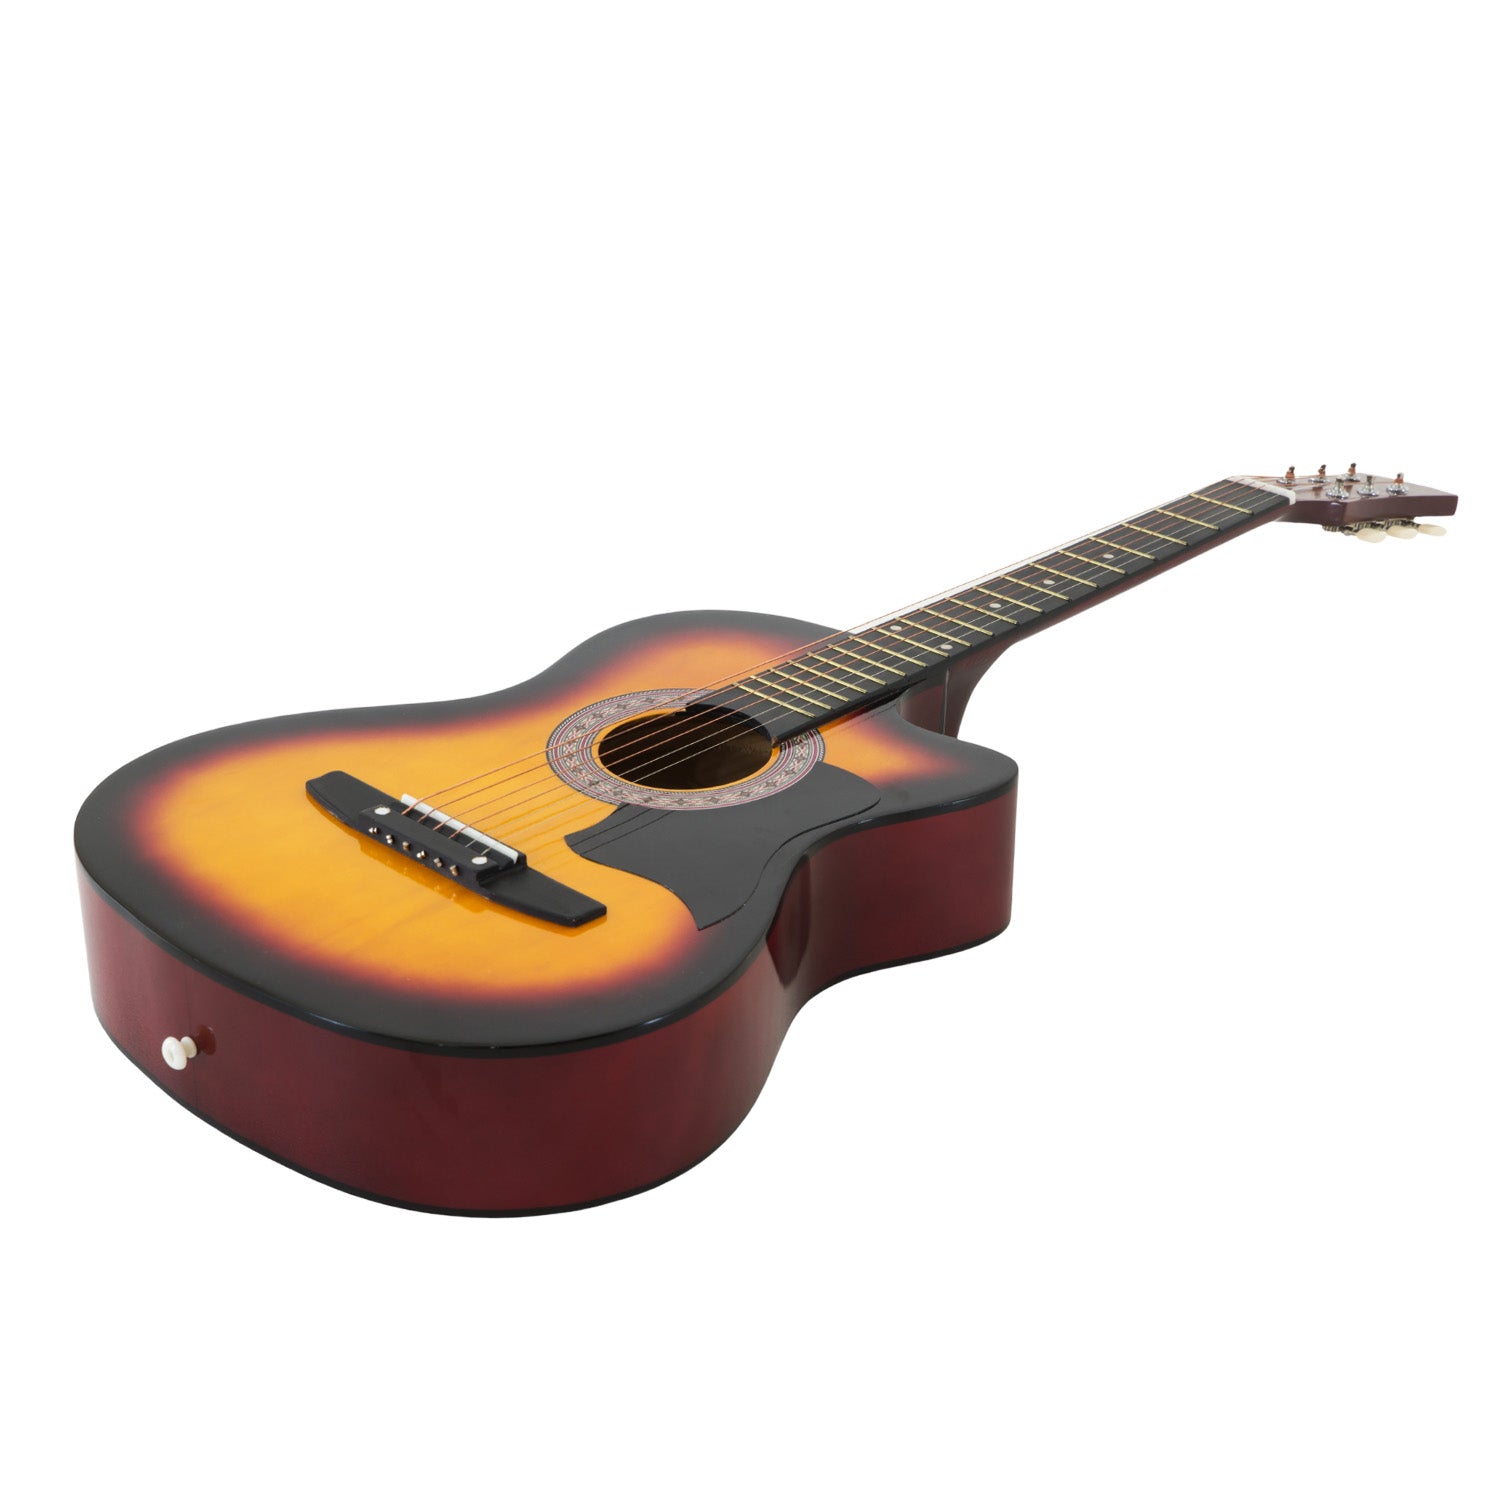 Karrera 38in Pro Cutaway Acoustic Guitar with Bag Strings - Sun Burst - SILBERSHELL